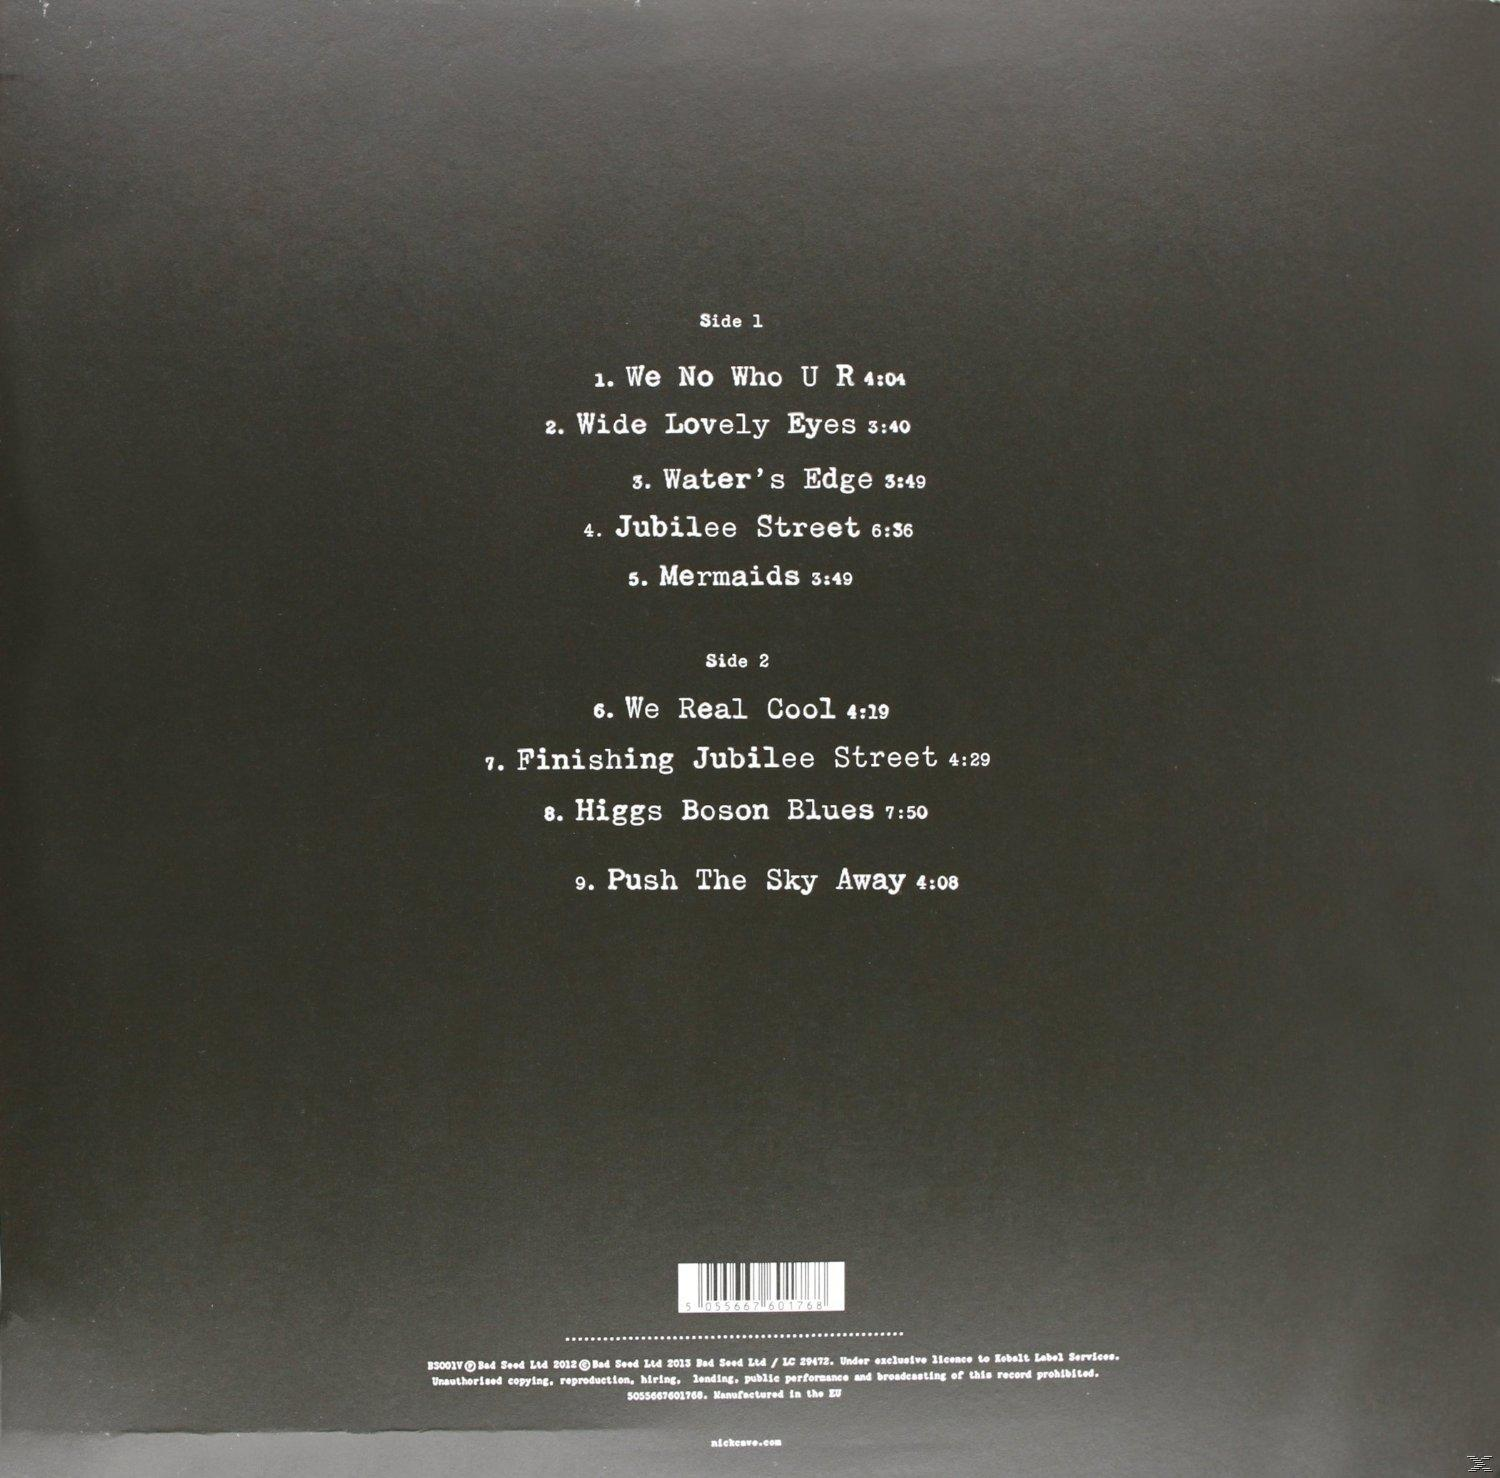 PUSH The Nick SKY Bad & (180G+MP3) (Vinyl) THE AWAY Seeds Cave - -